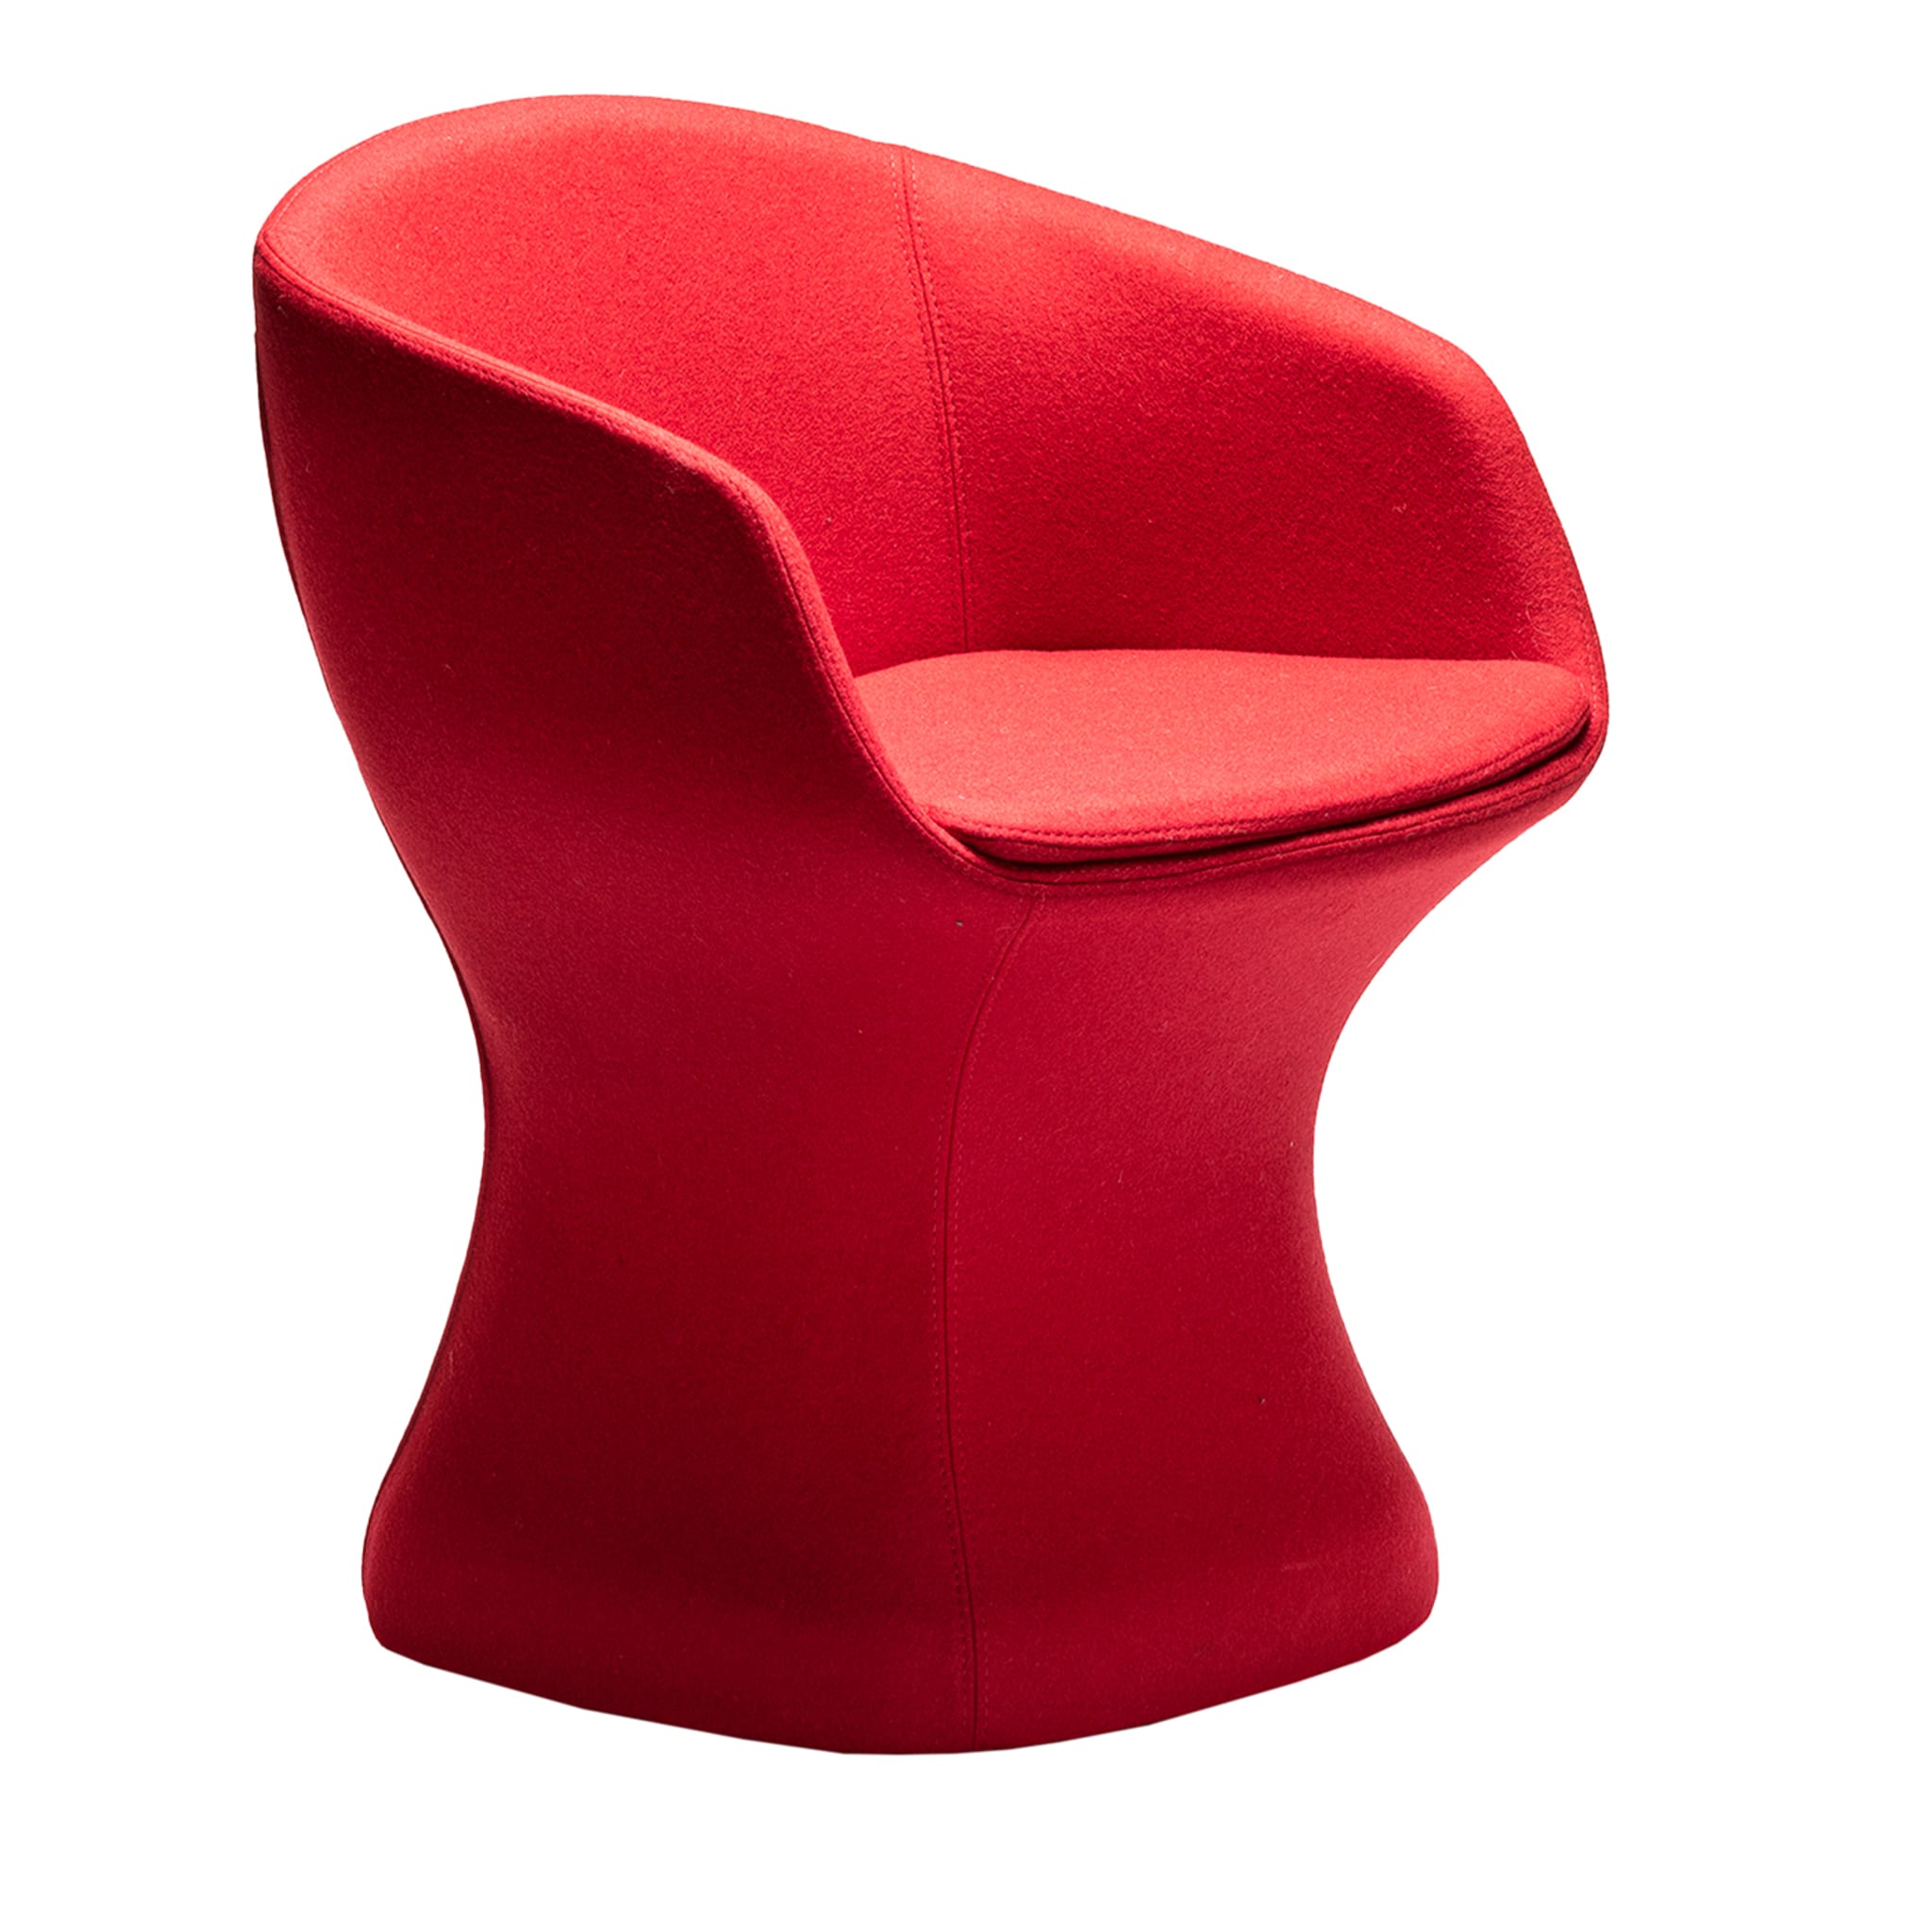 So-Pretty Red Armchair by Dario Deplin - Main view